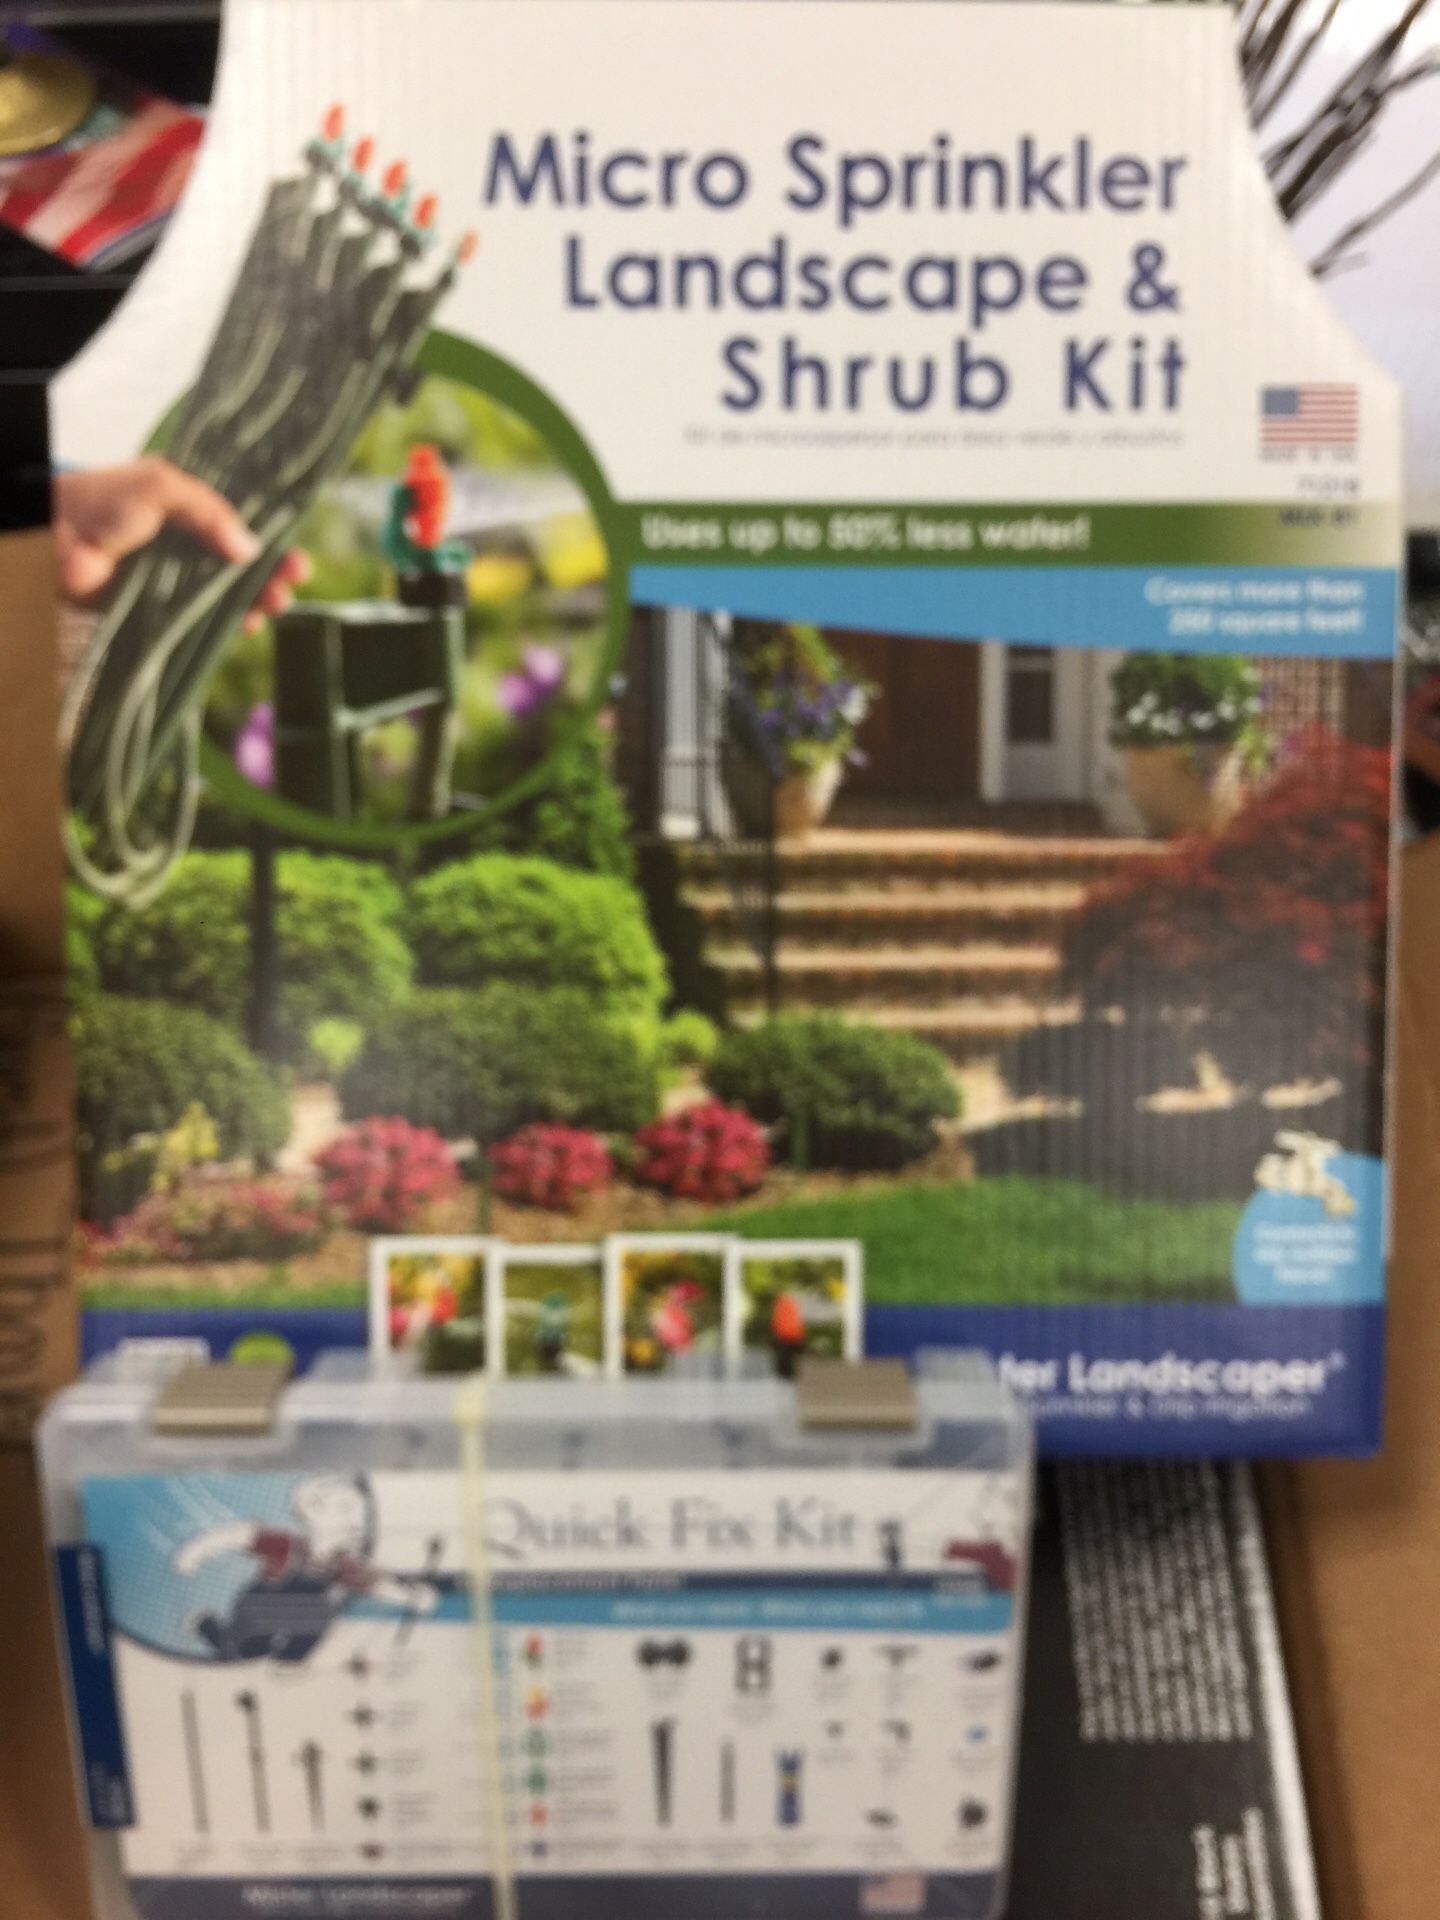 Mister Landscaper Micro Sprinkler Landscape & Shrub Kit & Quick Fix Kit